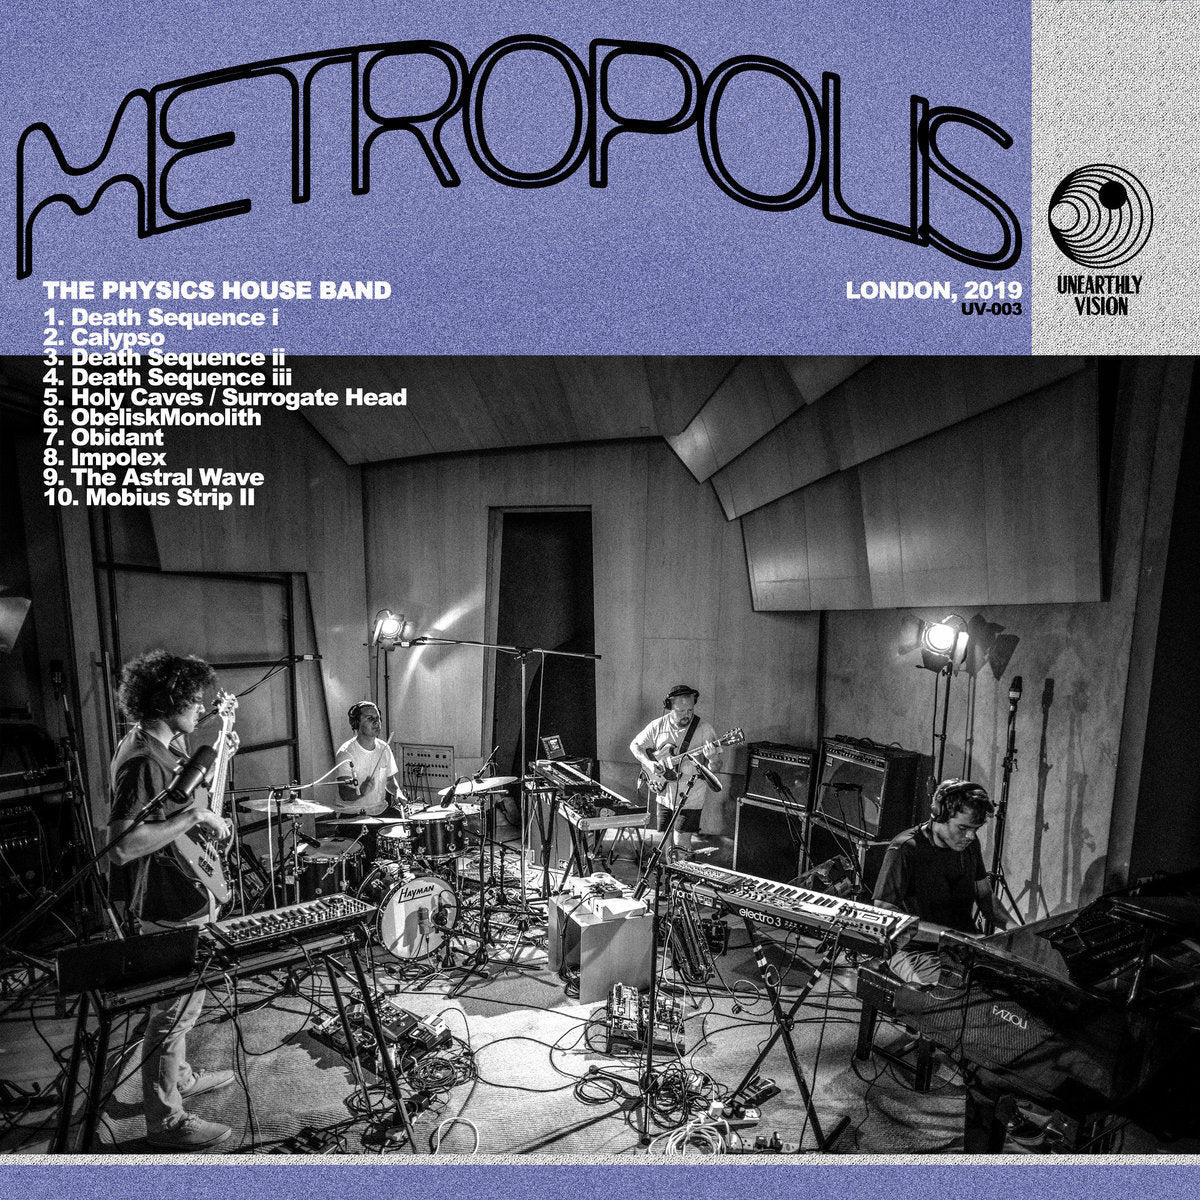 PHYSICS HOUSE BAND - Metropolis - LP - Purple 180g Vinyl